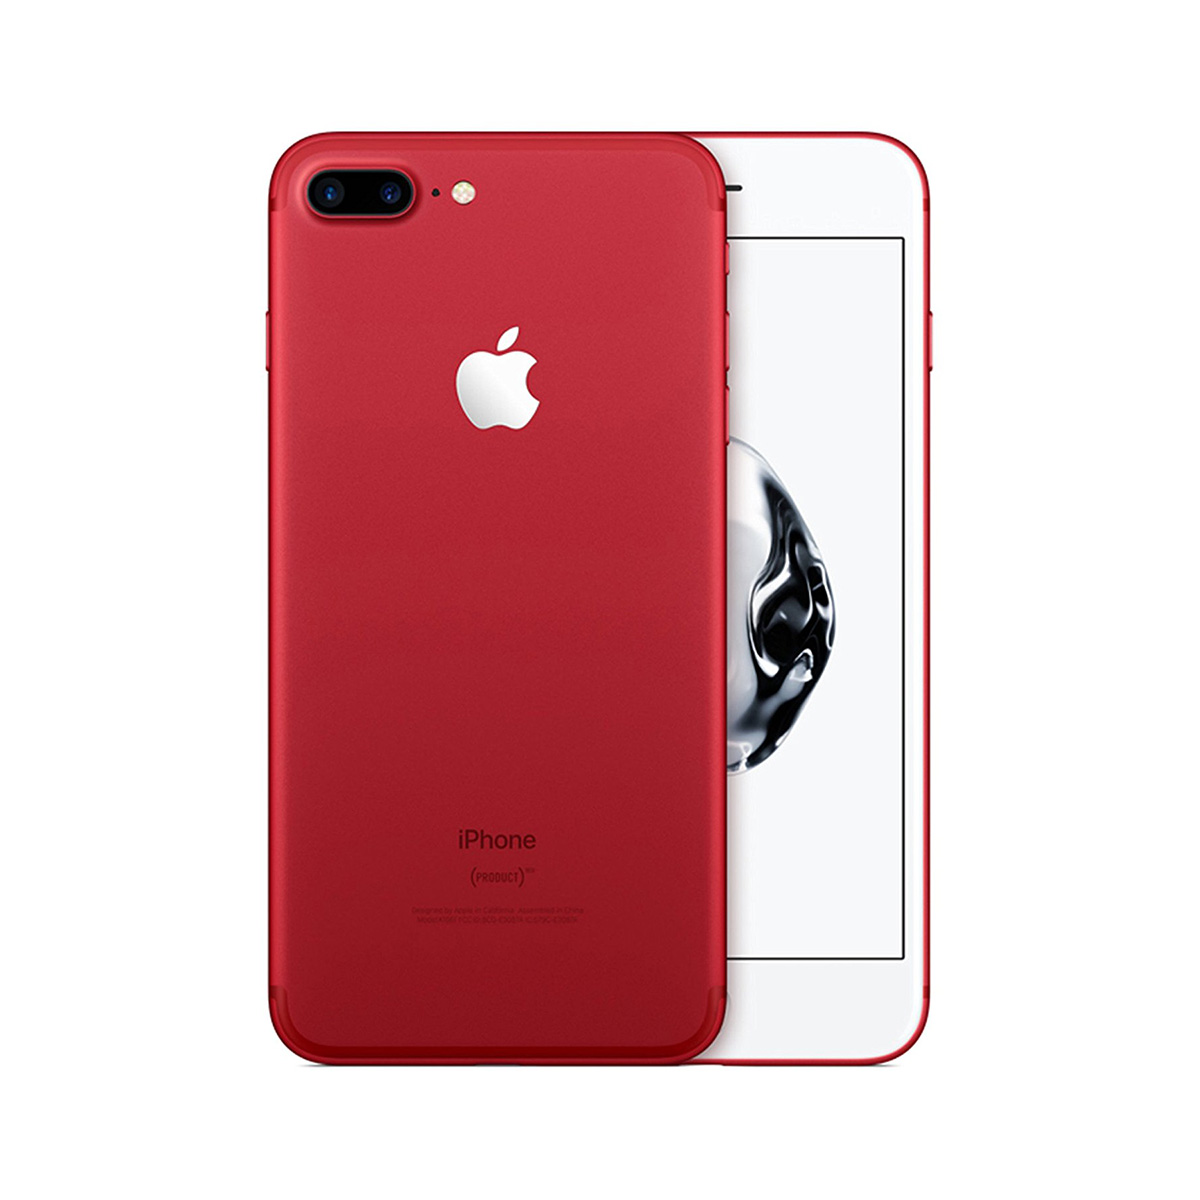 Iphone 7plus 32 Red (UK Used)